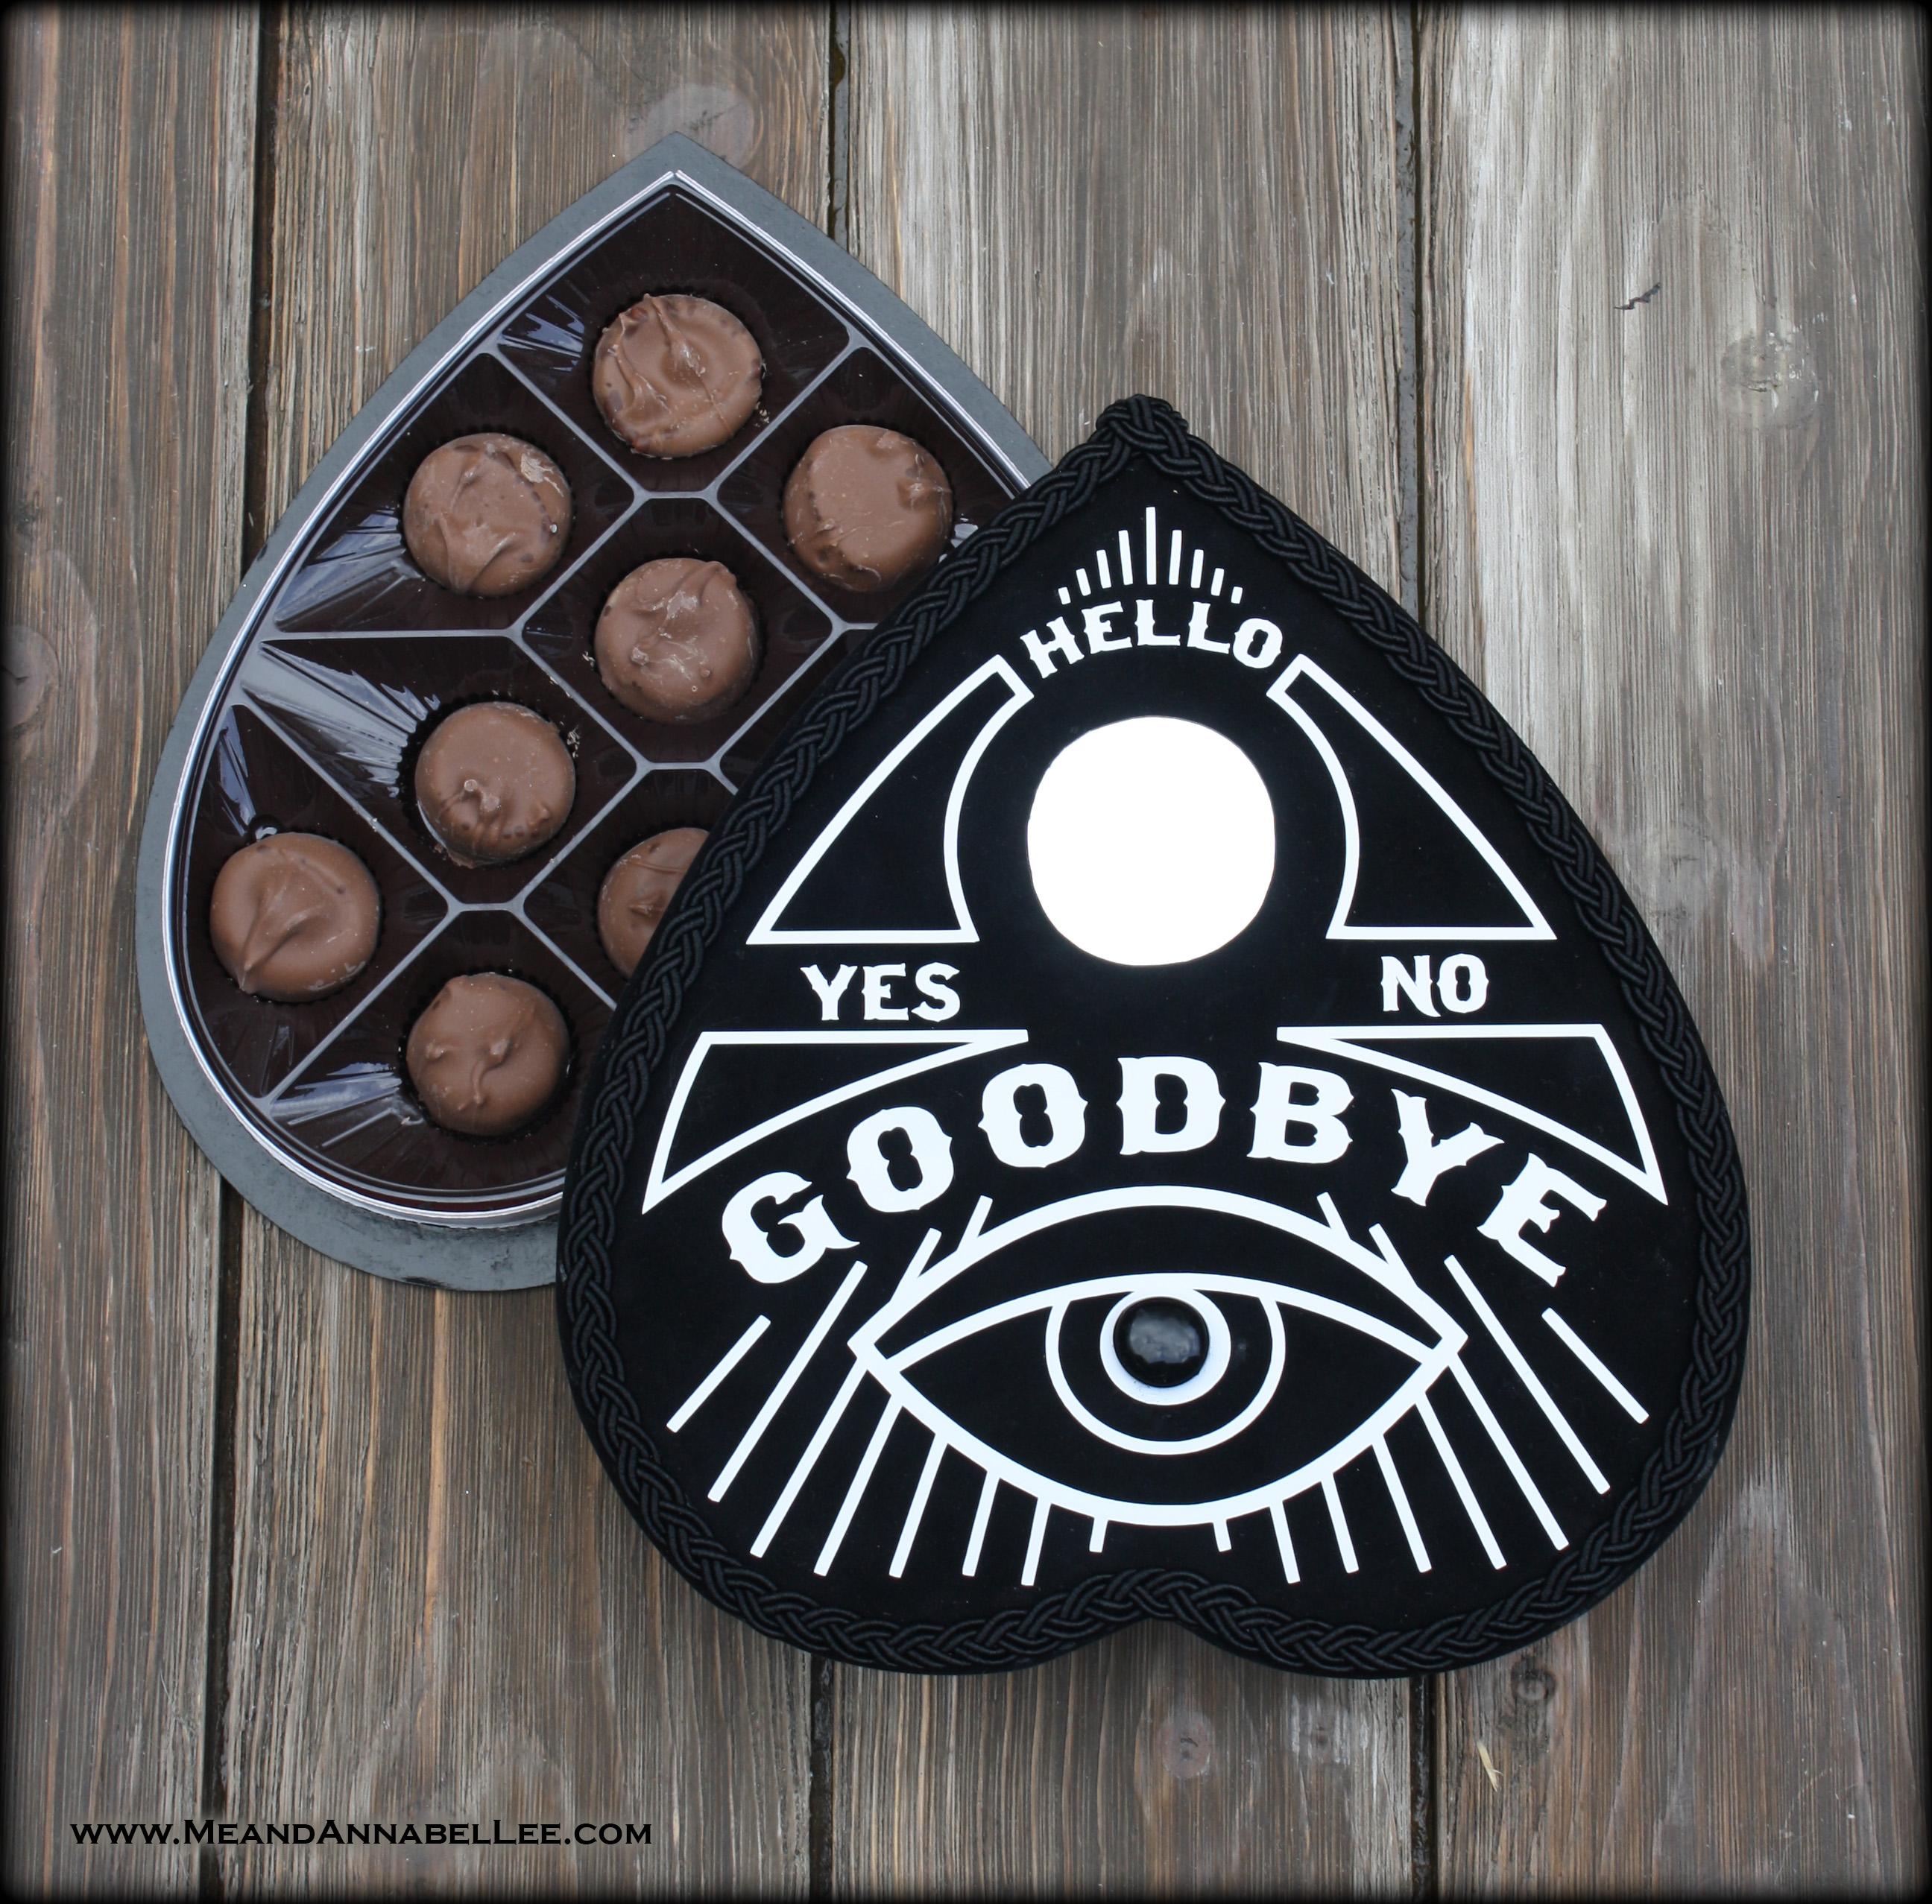 Ouija Planchette Valentine Box of Chocolate |Heart Shaped Box | Gothic Valentine’s Day | Goth it Yourself | Anti Valentine | Occult | All Seeing Eye | Hello Goodbye | Dark Romance | www.MeandAnnabelLee.com